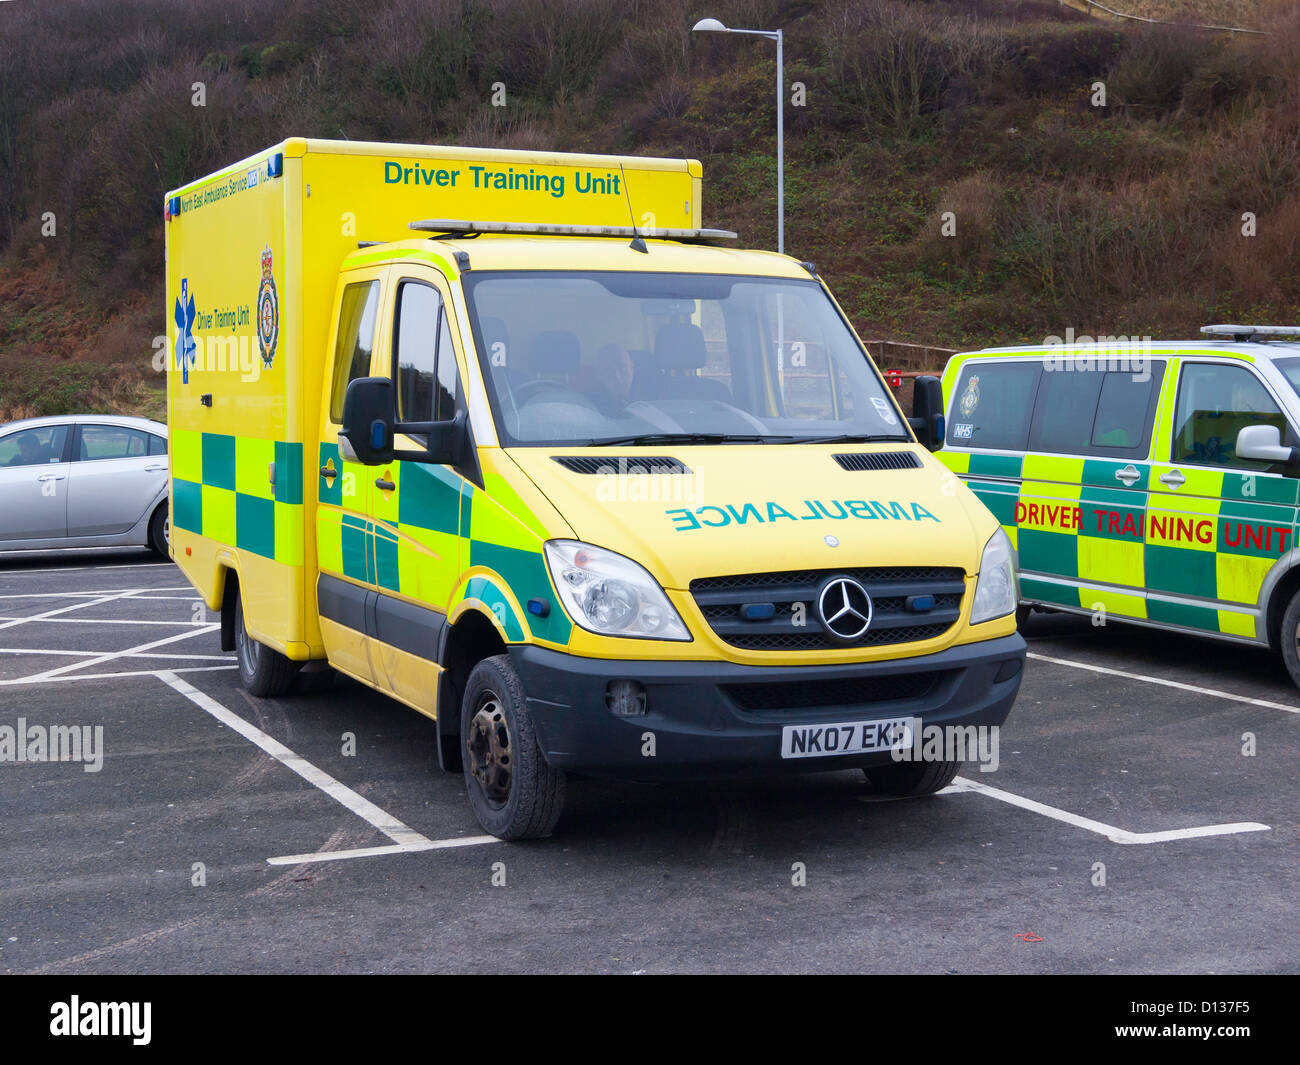 North East NHS Trust Ambulance Driver Training vehicles at Saltburn Cleveland UK Stock Photo